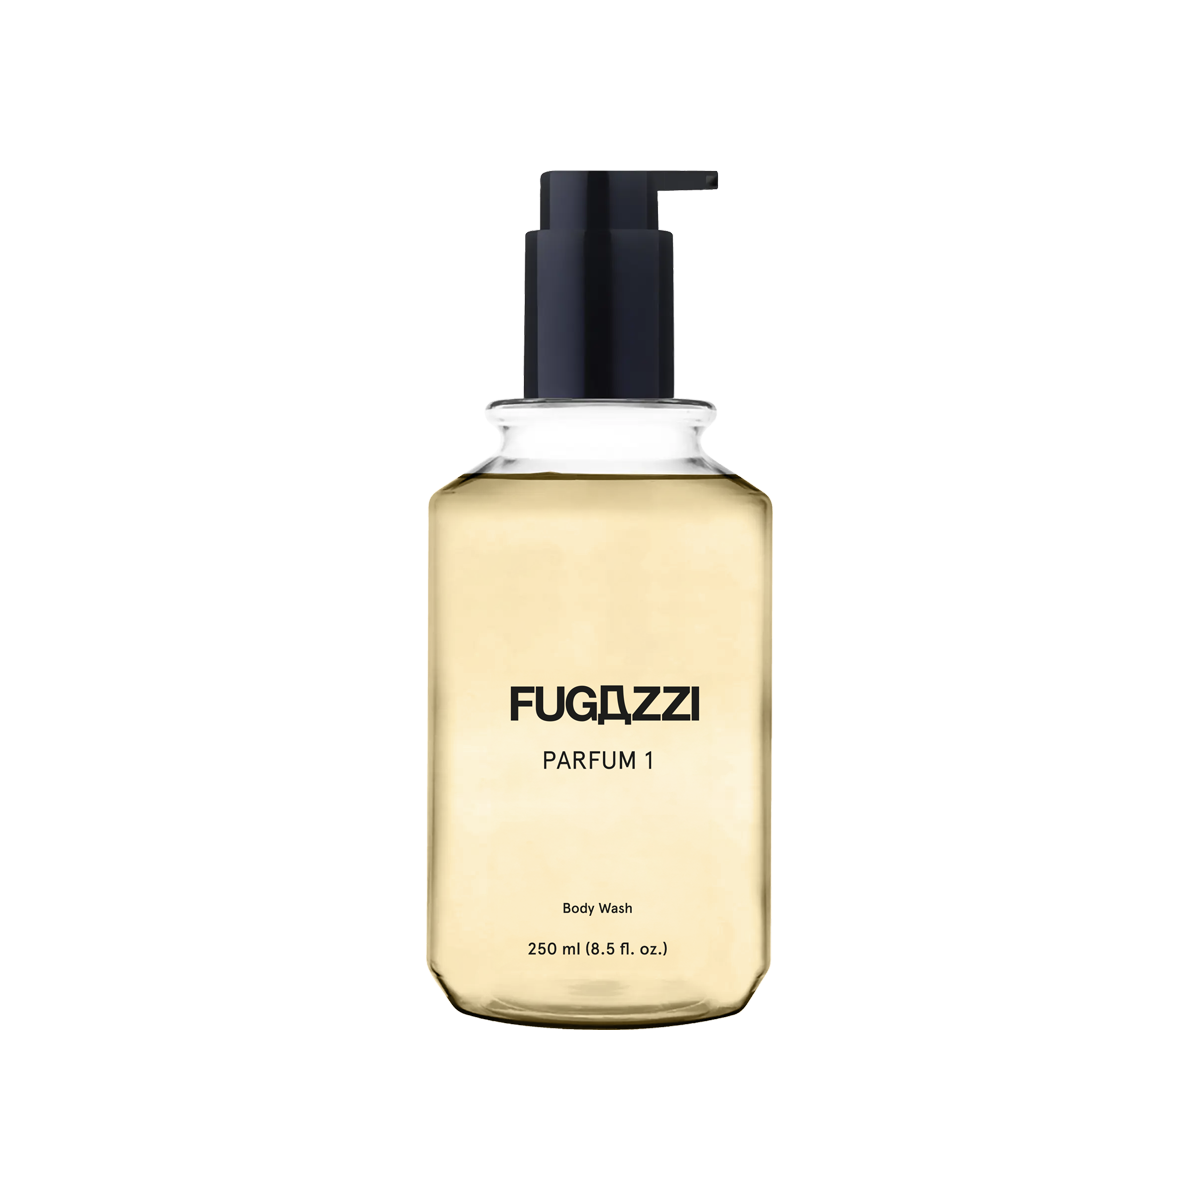 Fugazzi - Parfum 1 Body Wash